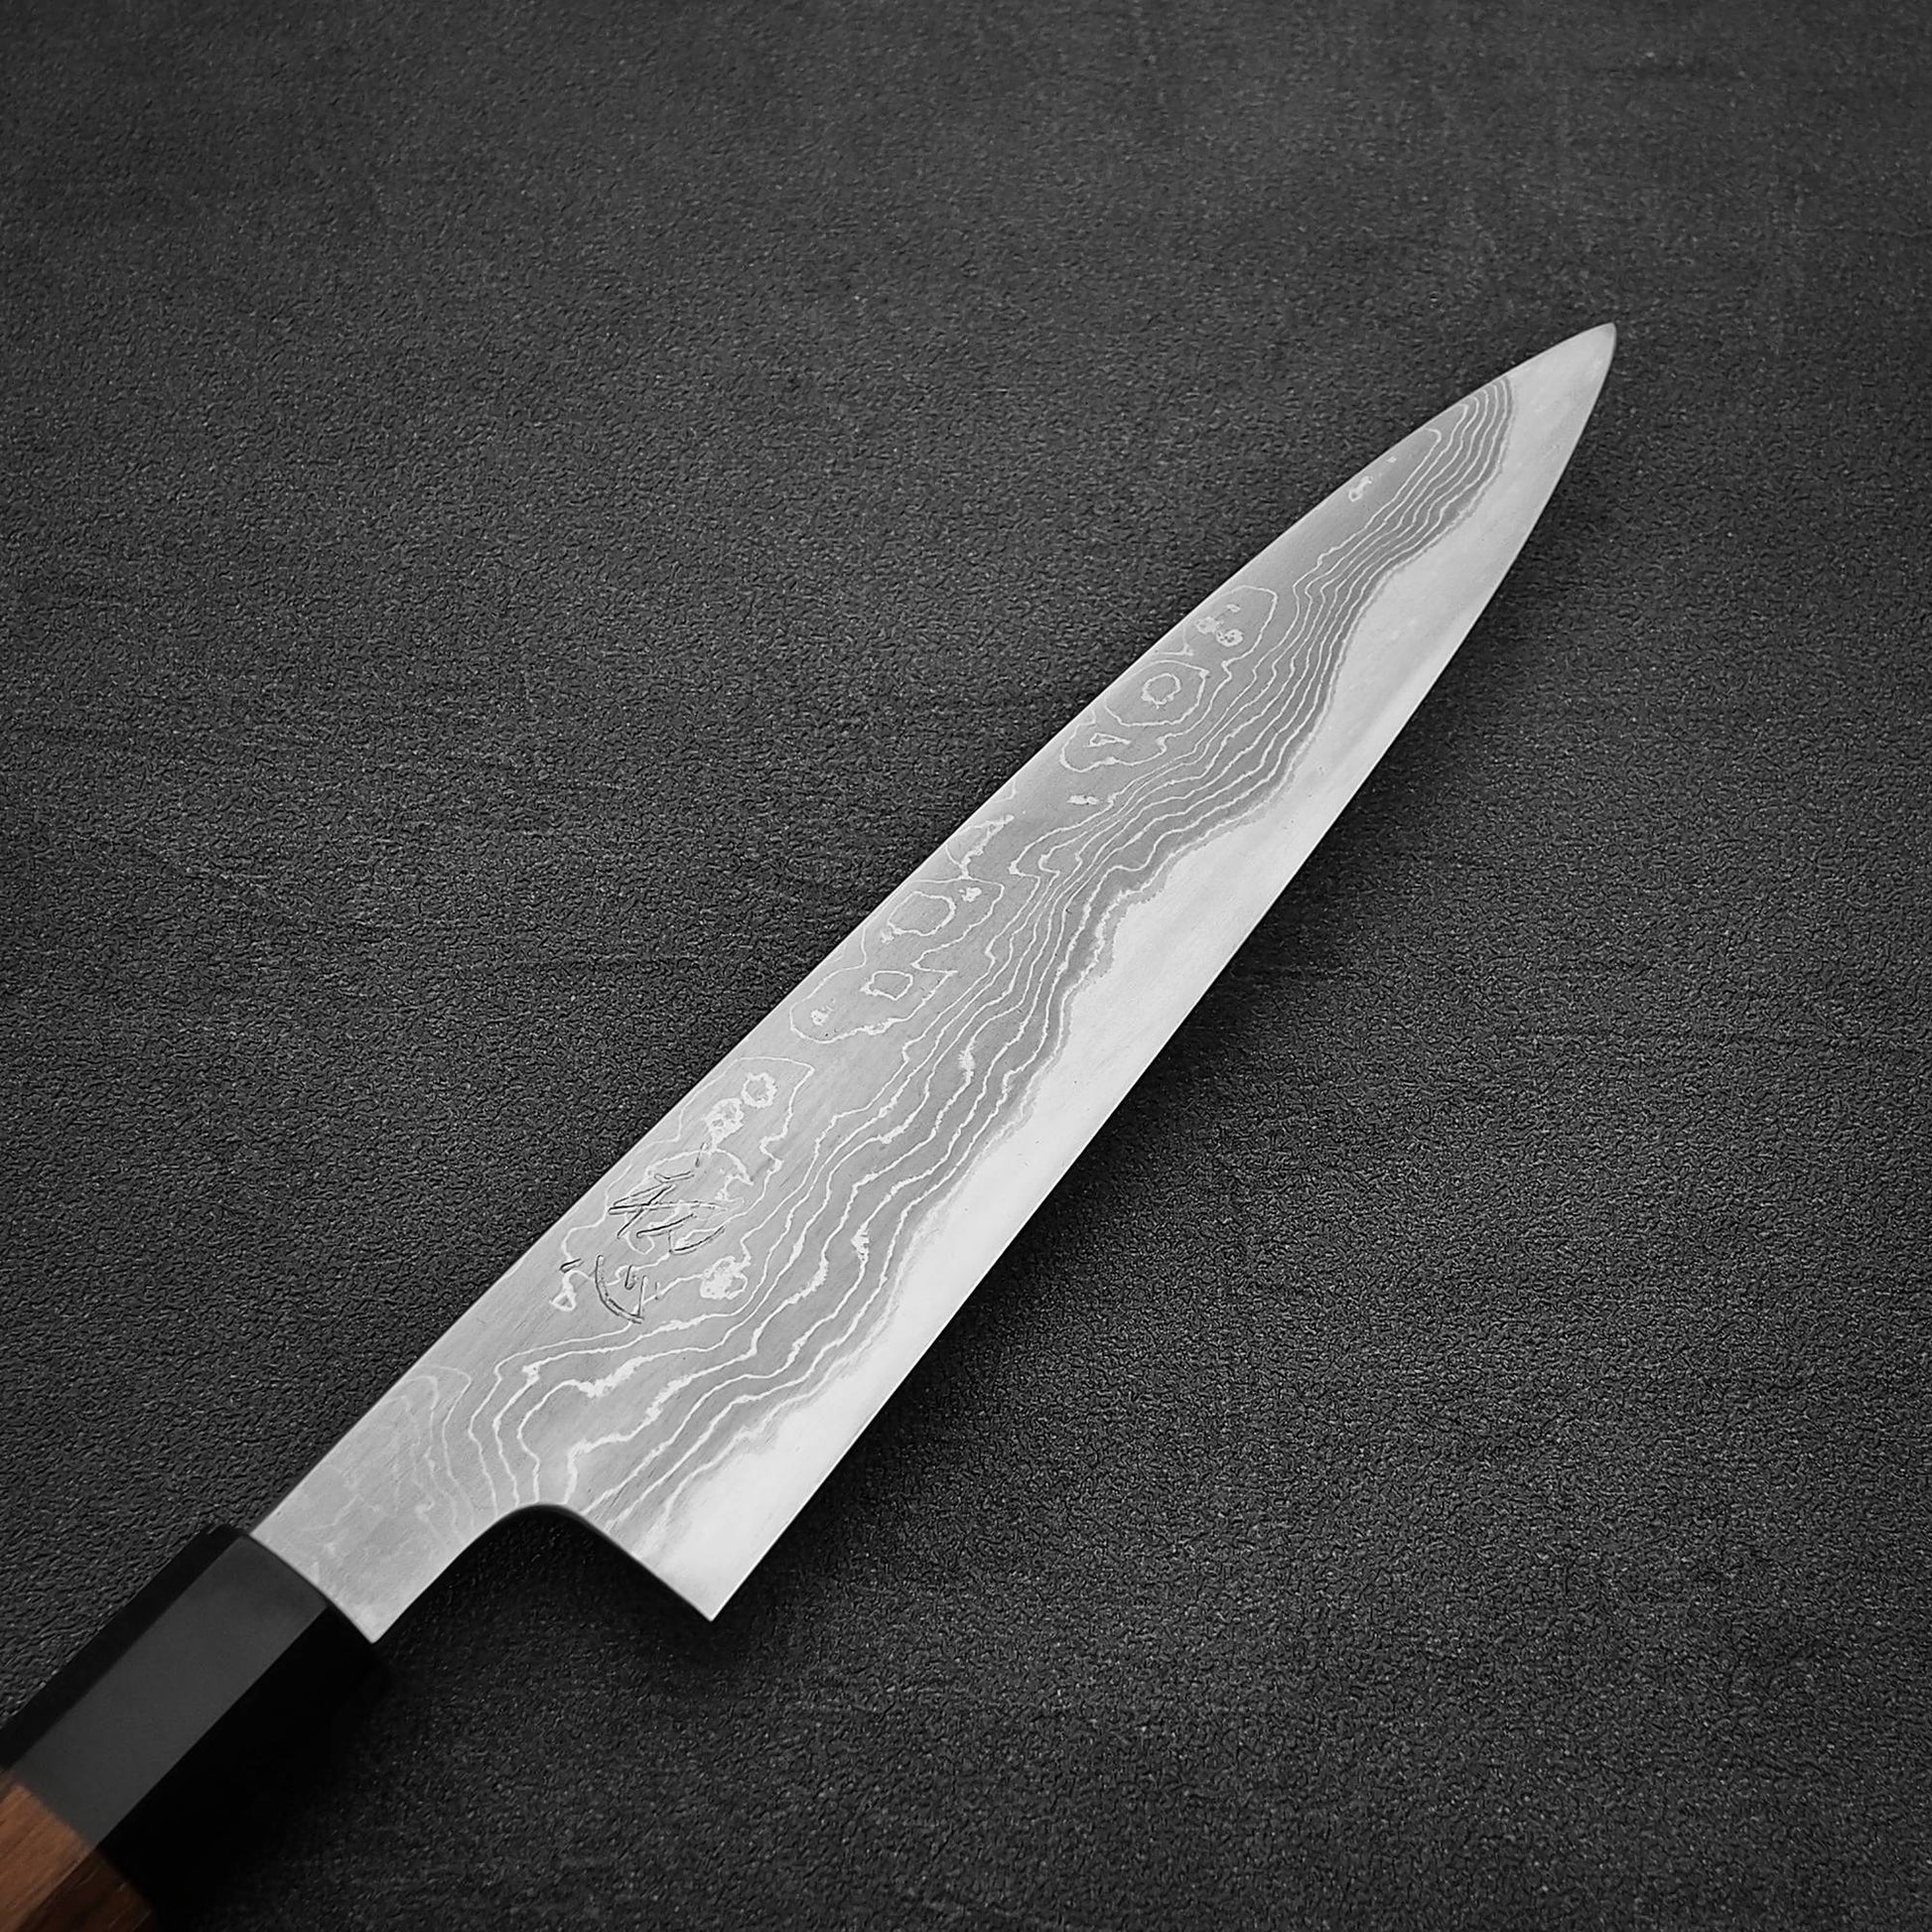 Close up view of the front blade of Hatsukokoro Komorebi damascus aogami#1 petty knife 